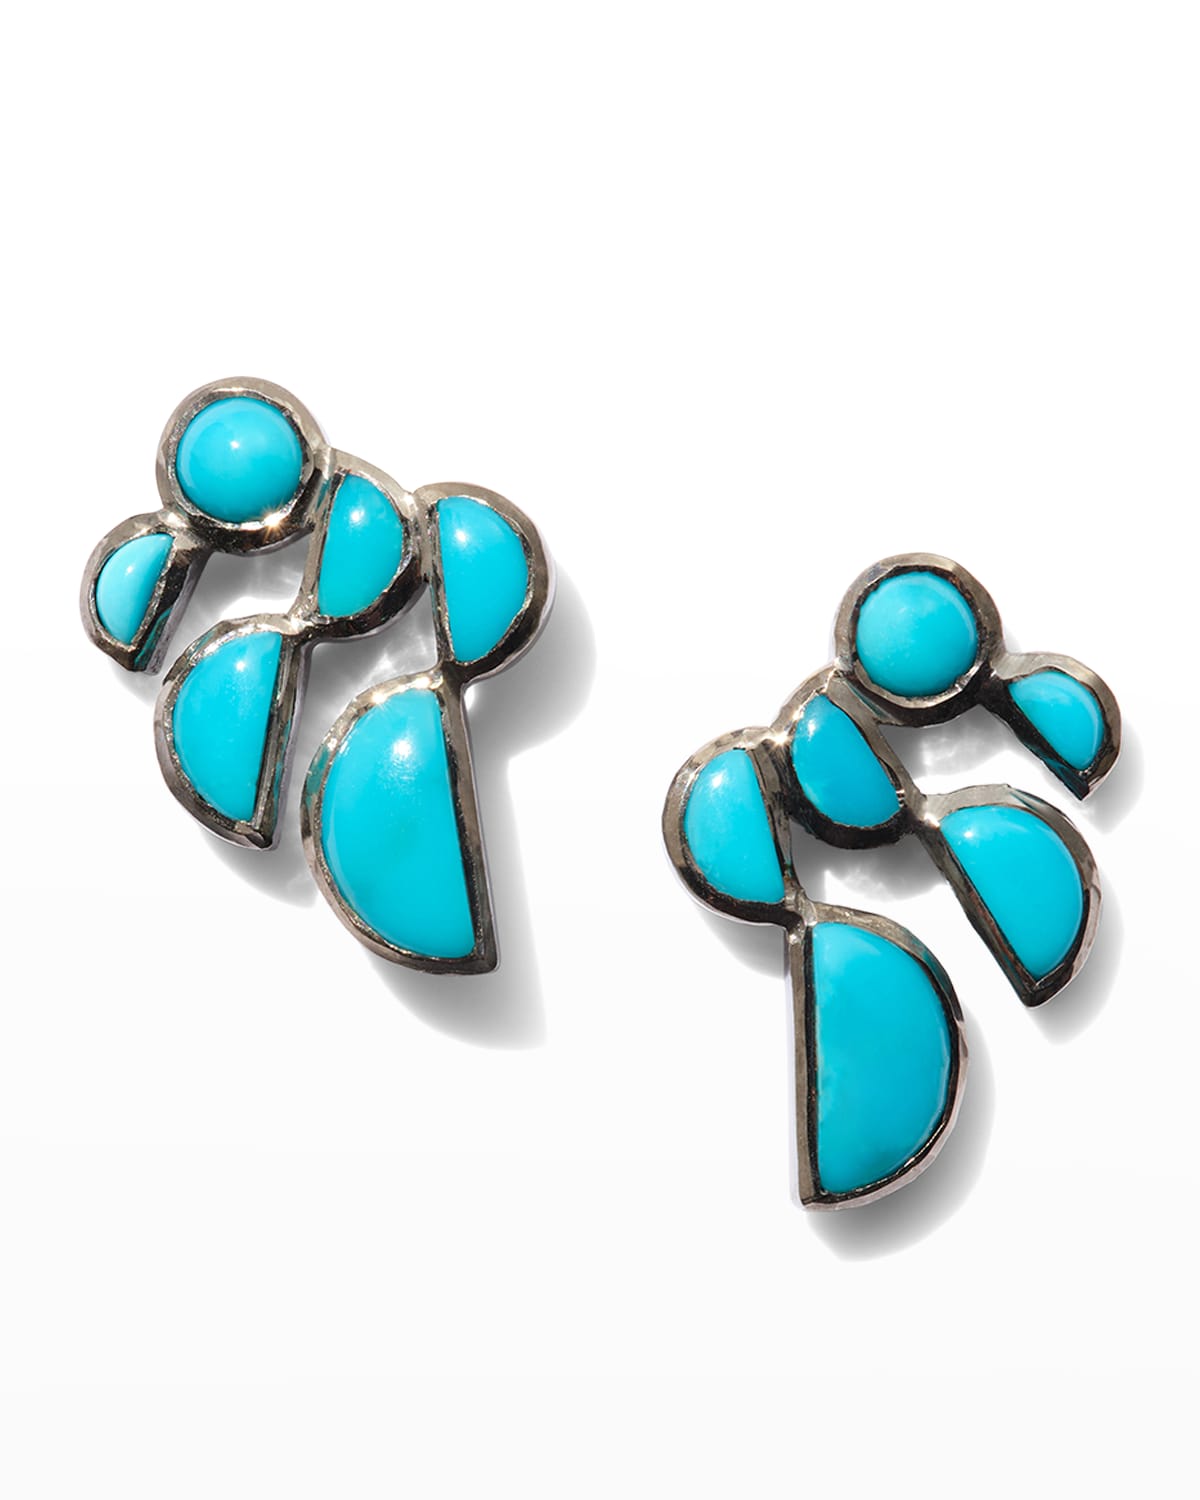 Prawn Earrings in Turquoise